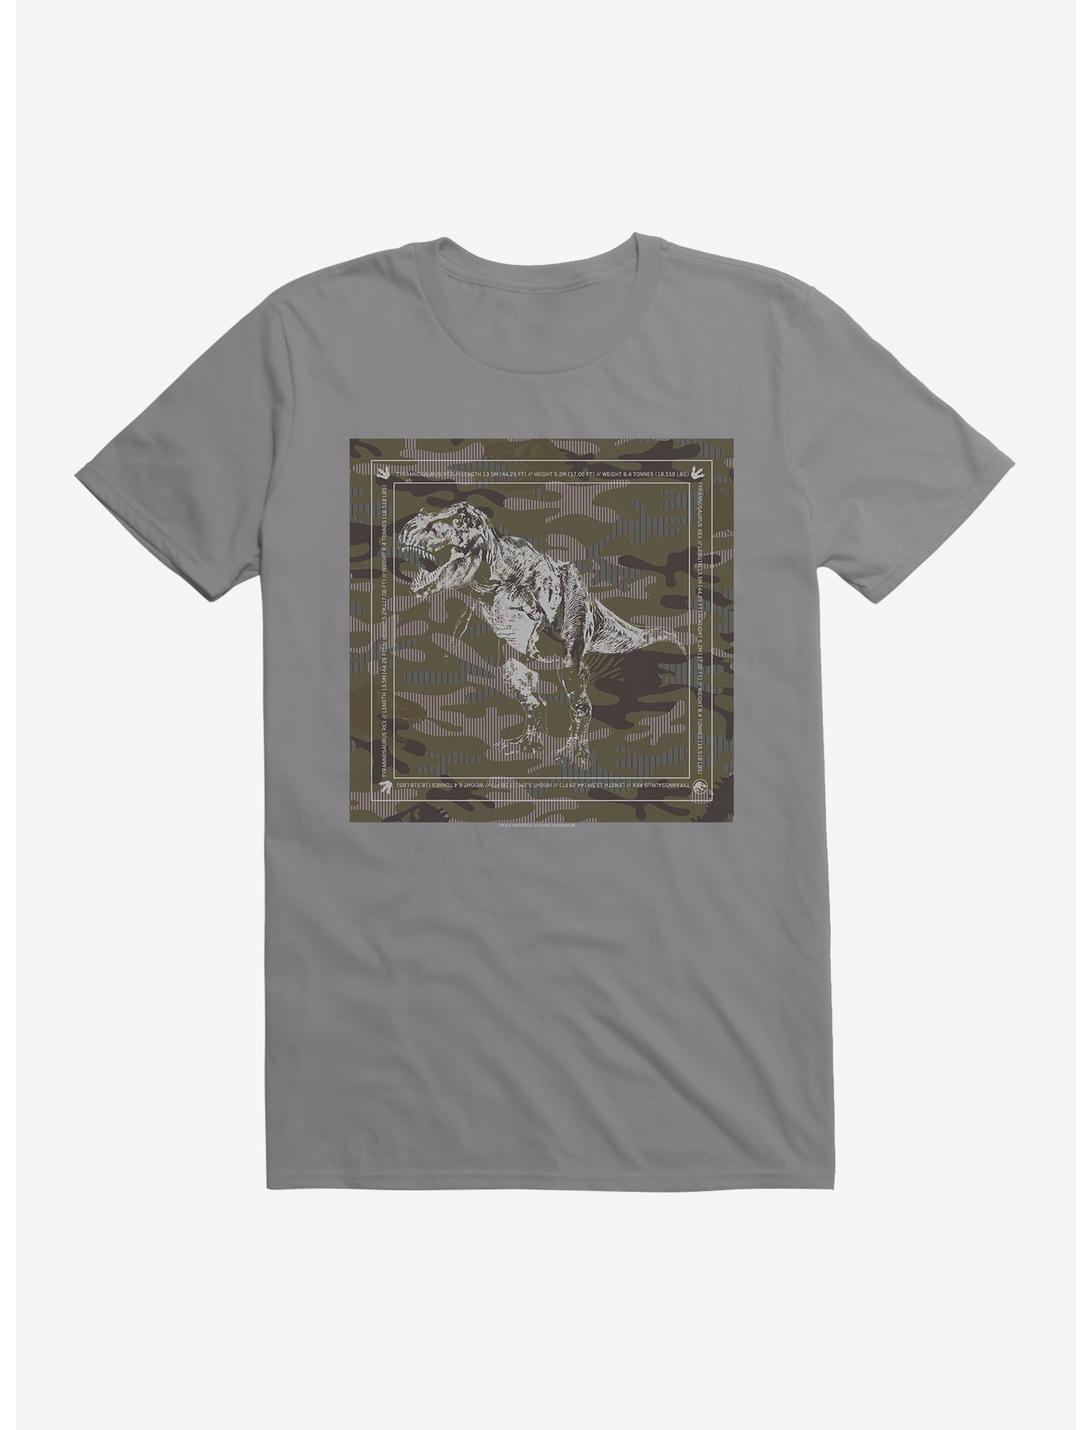 Jurassic World Camo Silhouette T-Shirt, , hi-res